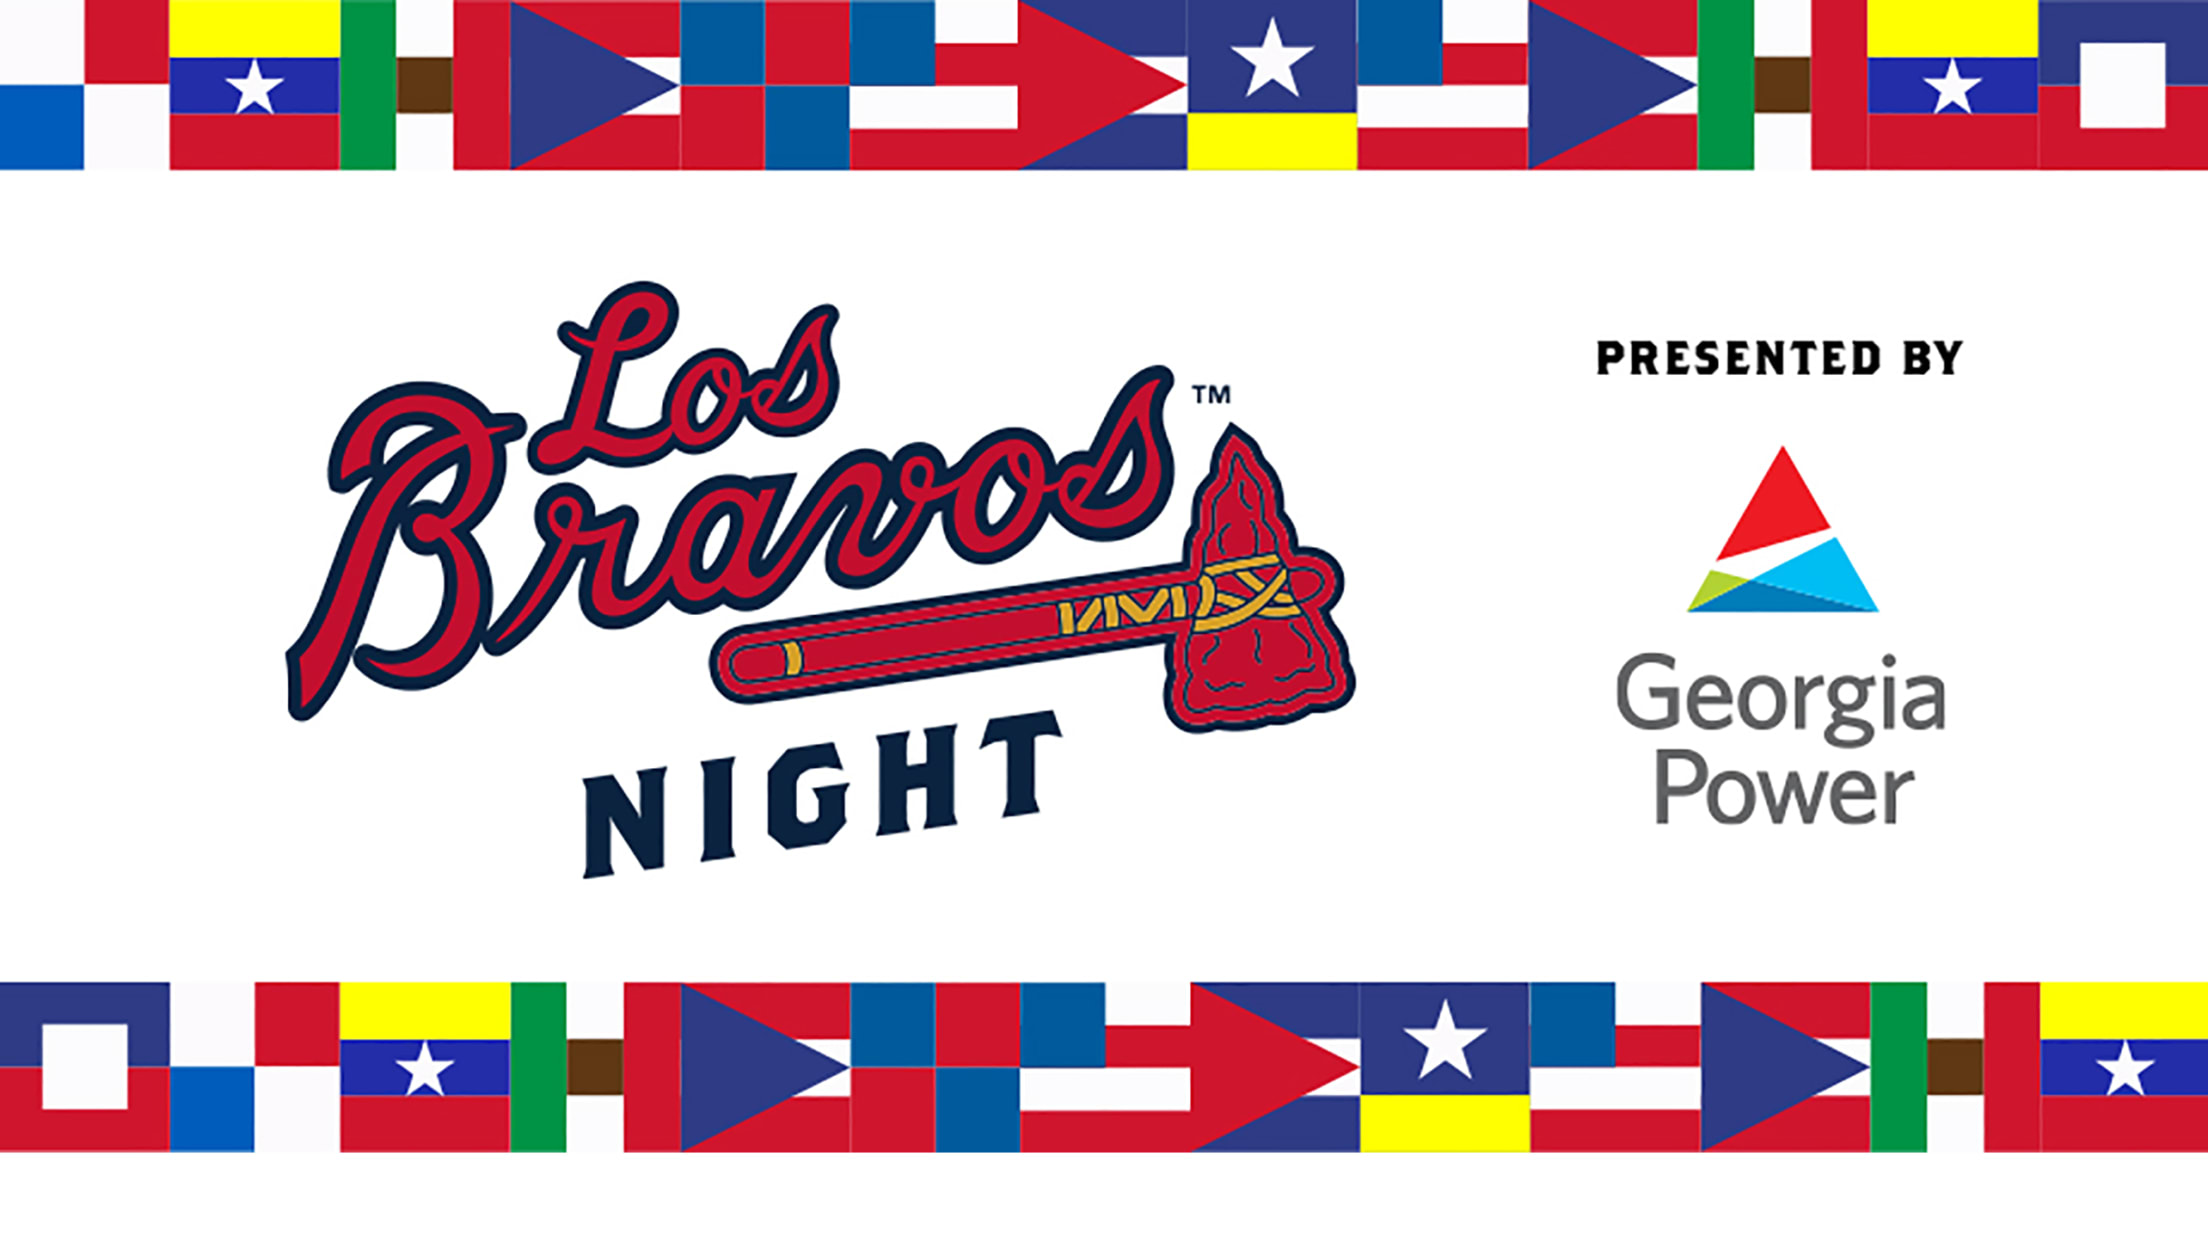 Los Bravos Night at Truist Park, Hispanic Heritage Month